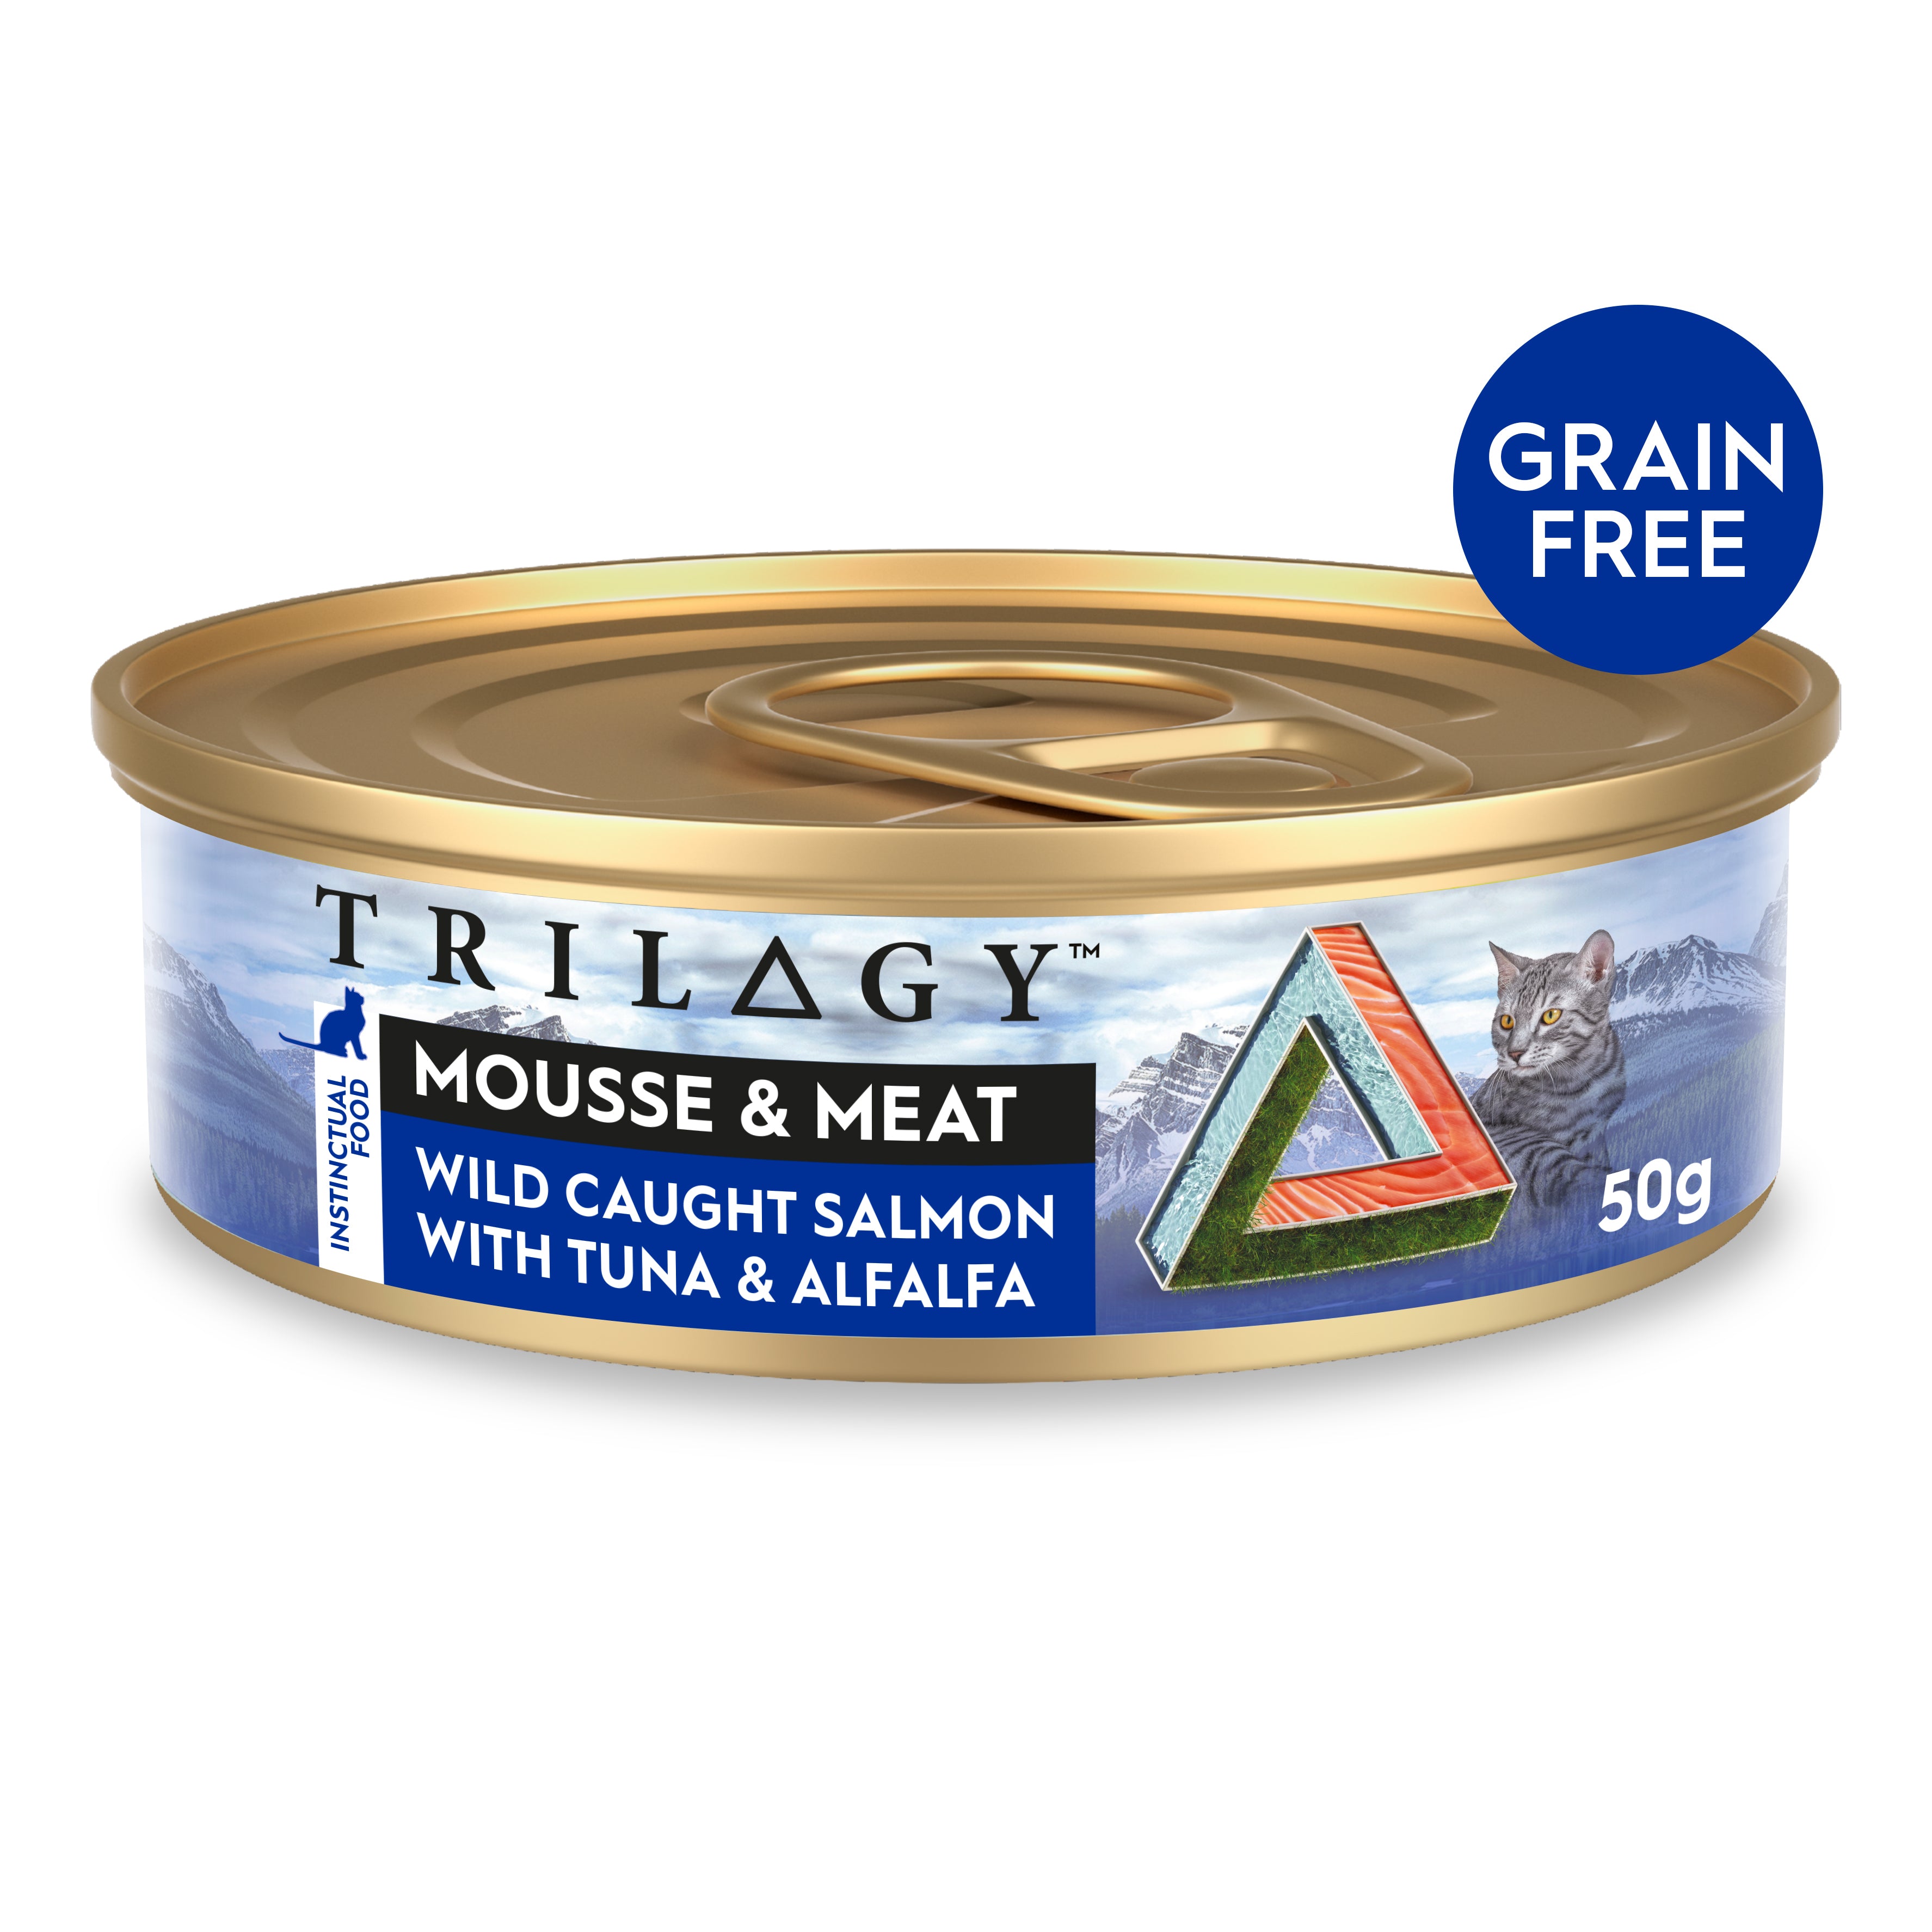 TRILOGY™ MOUSSE & MEAT WILD CAUGHT SALMON WITH TUNA & ALFALFA 50G